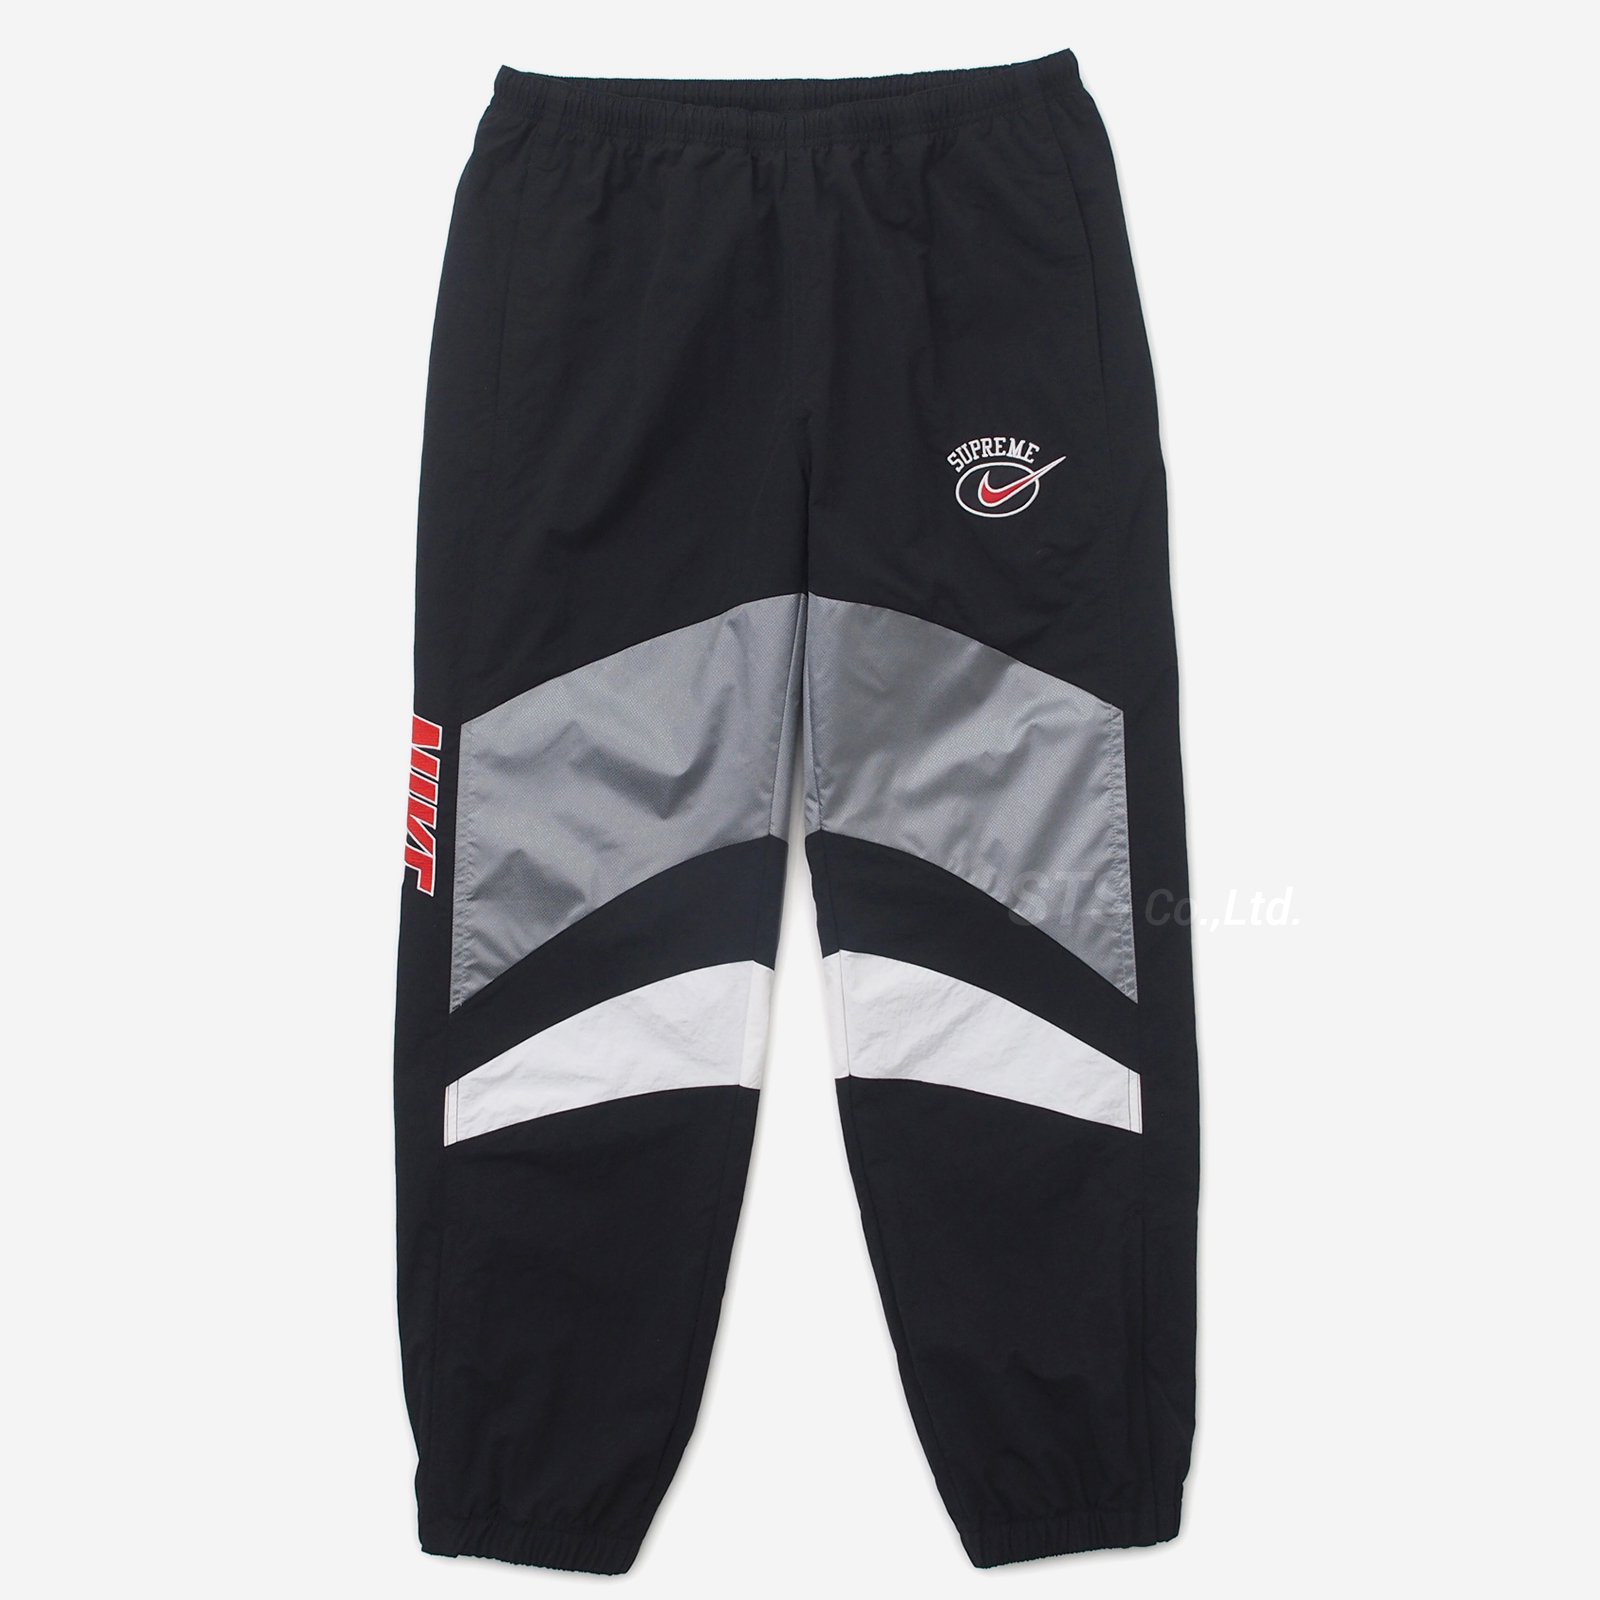 Supreme Nike warm up pants